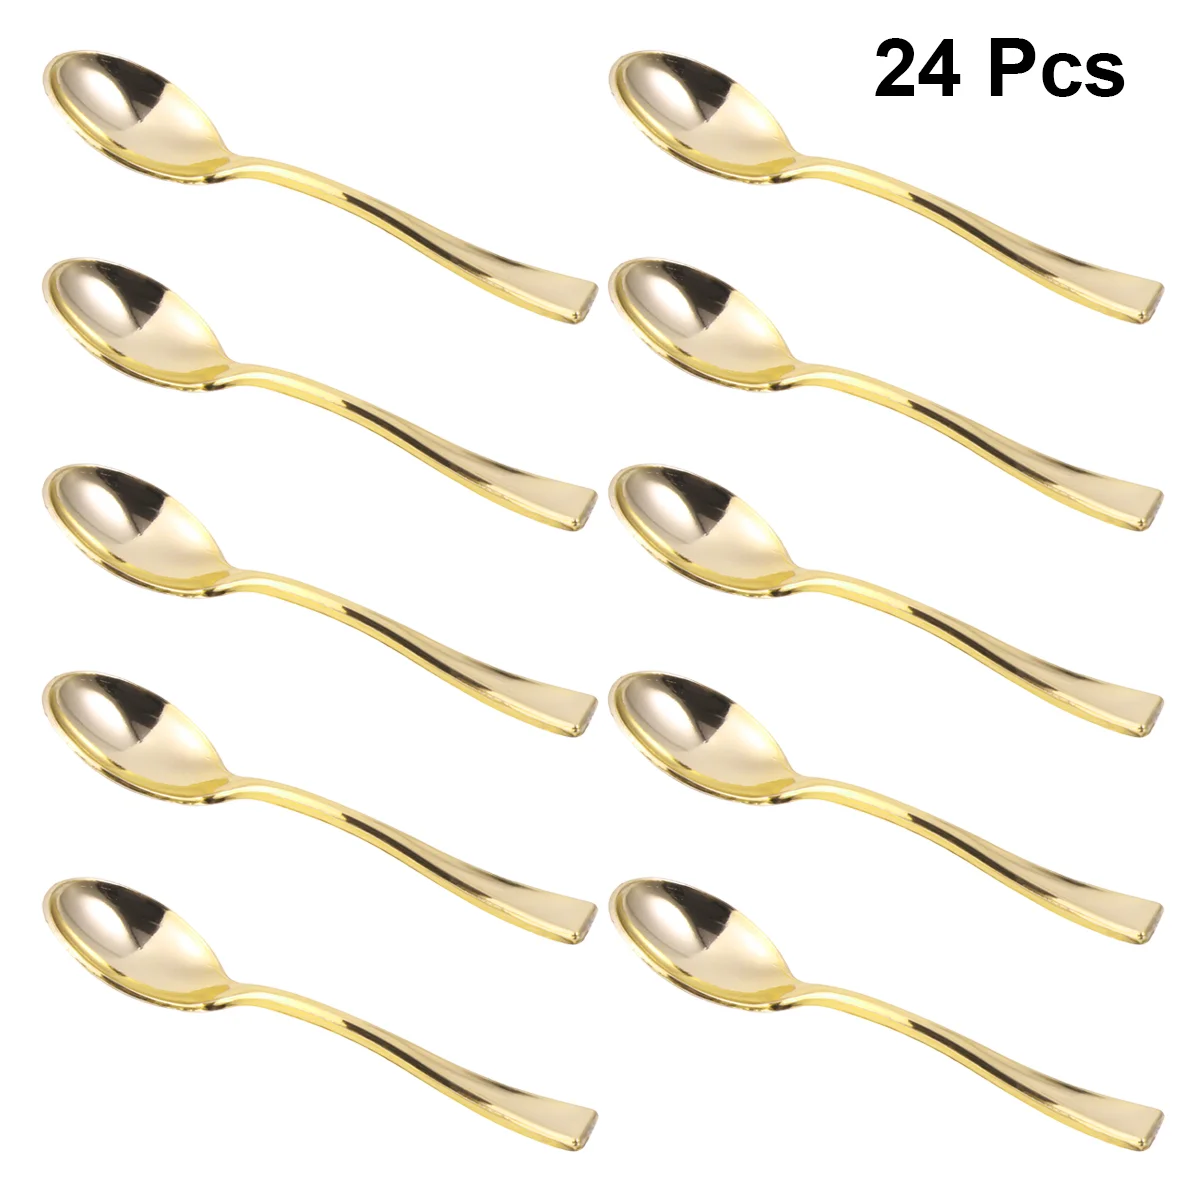 

Spoons Spoon Minidessert Gold Ice Cupcake Cream Cake Cutlery Serving Appetizer Tastingdesserts Flatware Dinner Coffee Forks